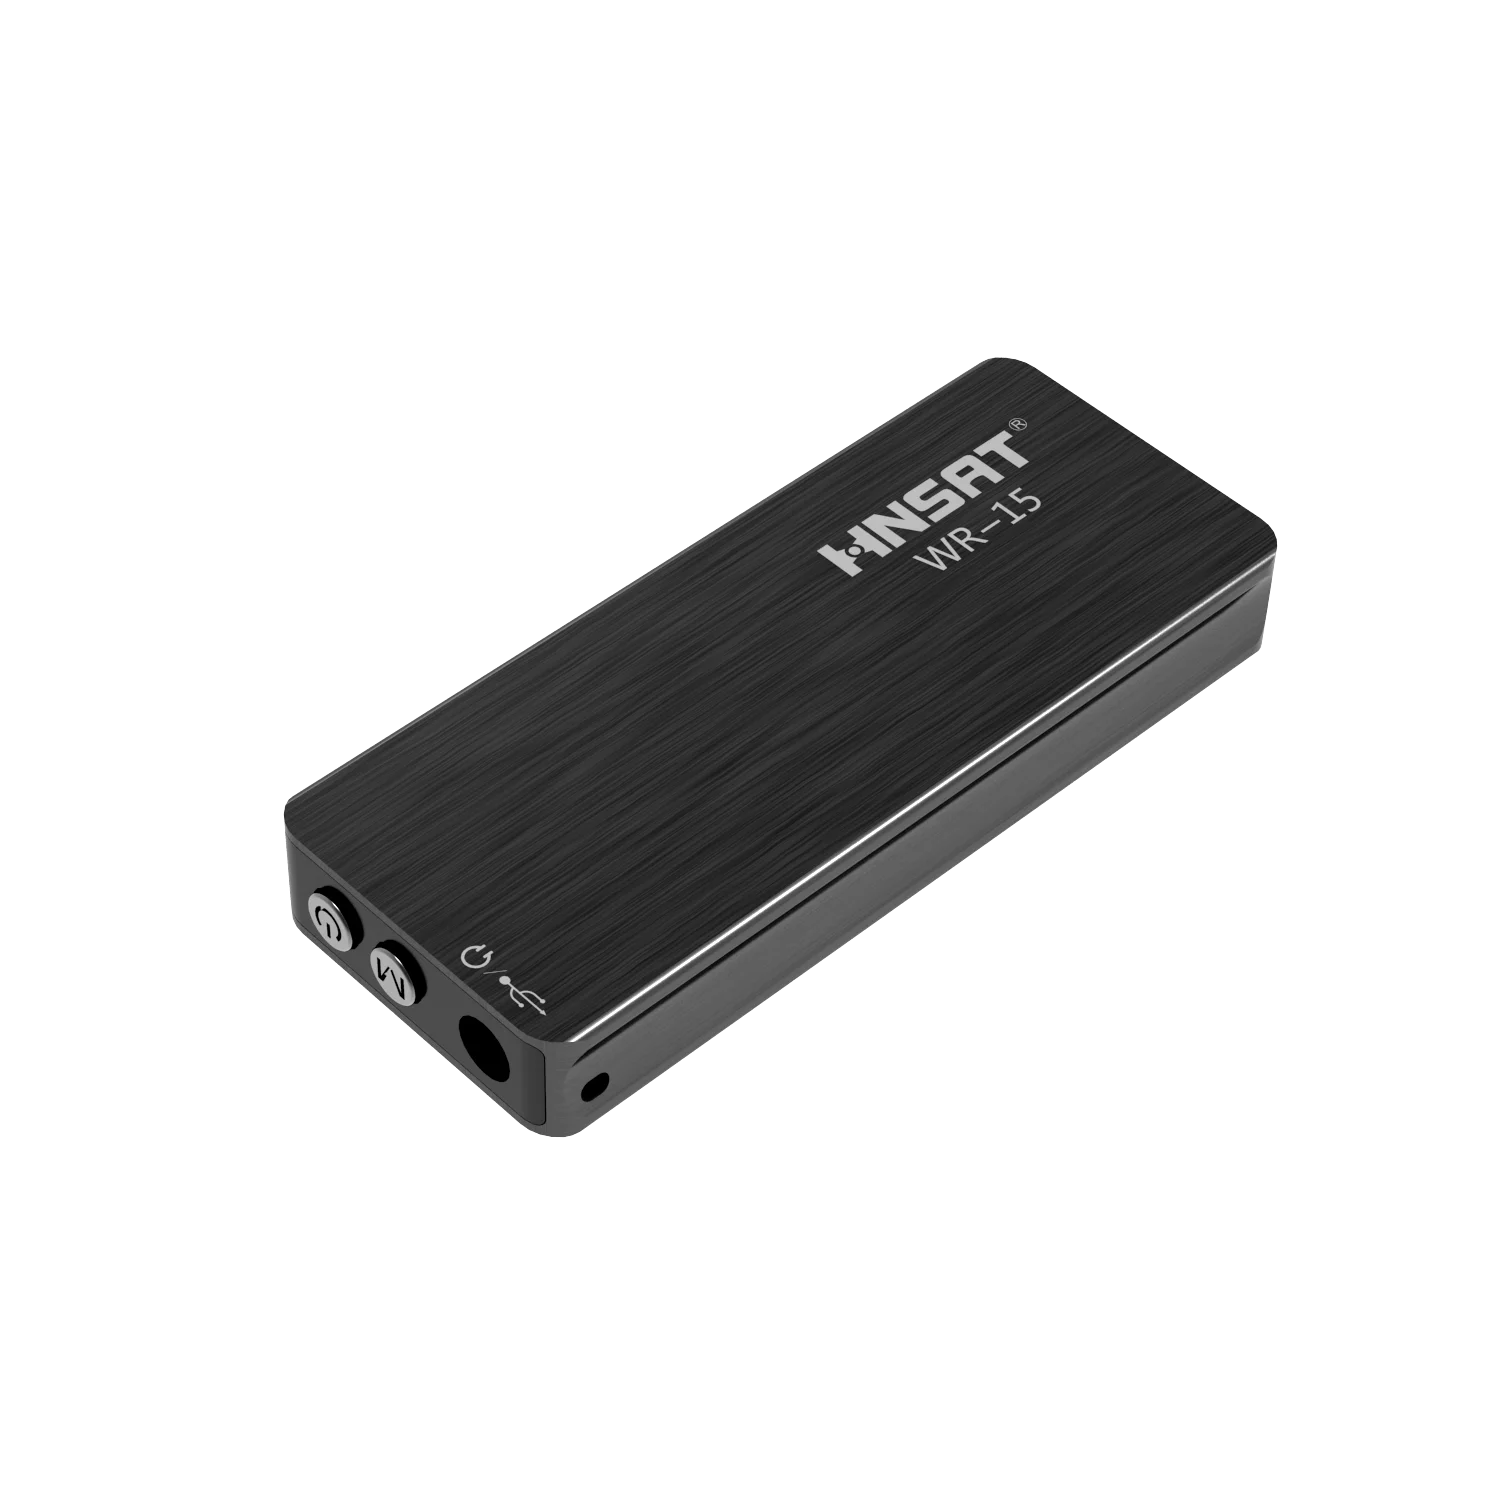 product-Hnsat-Mini Voice Activated Recorder Slim USB Flash Drive USB Memory Stick Sound Recorder WR-